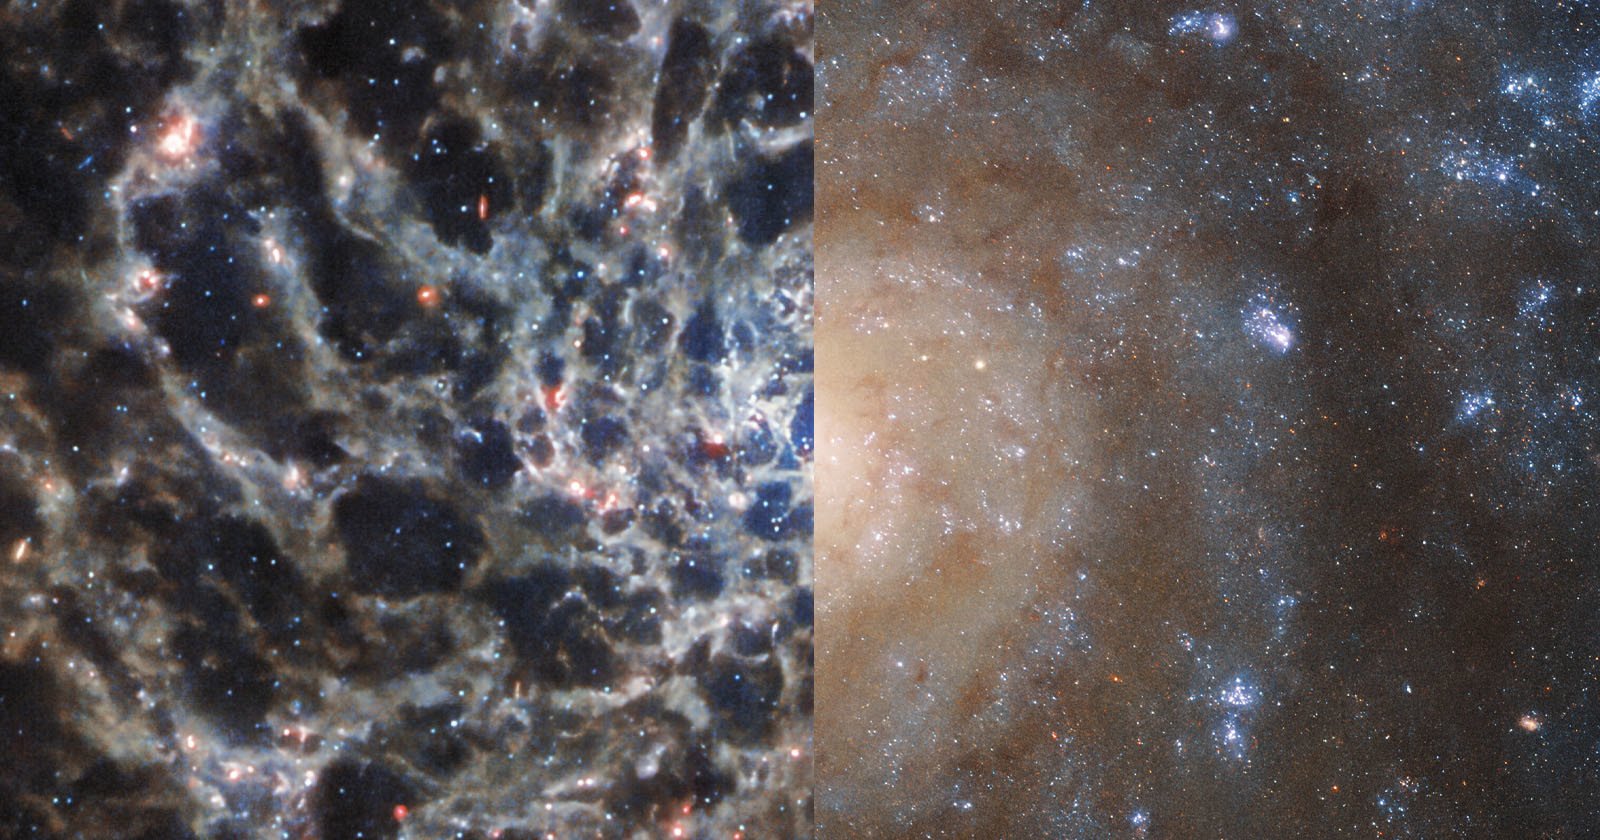  james webb reveals bones galaxy also captured 